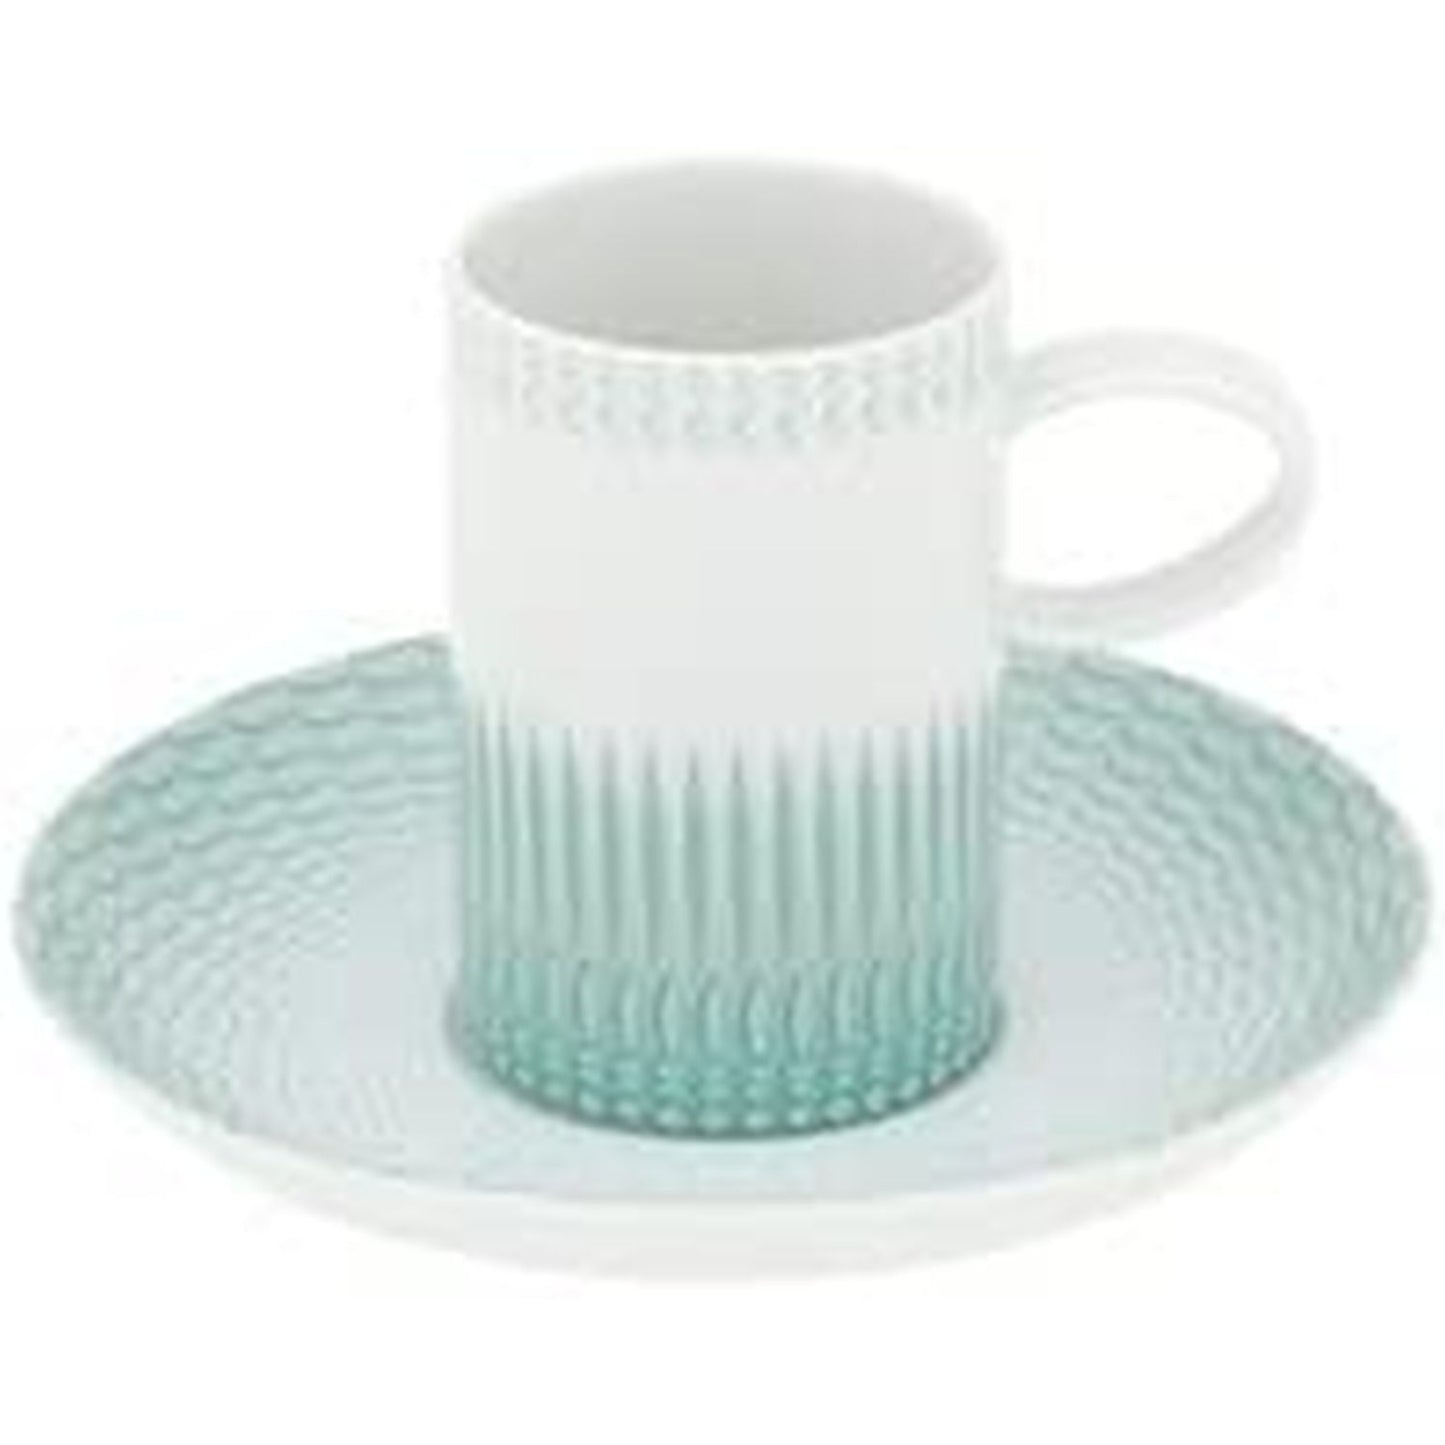 Vista Alegre Venezia Coffee Cup and Saucer, Porcelain